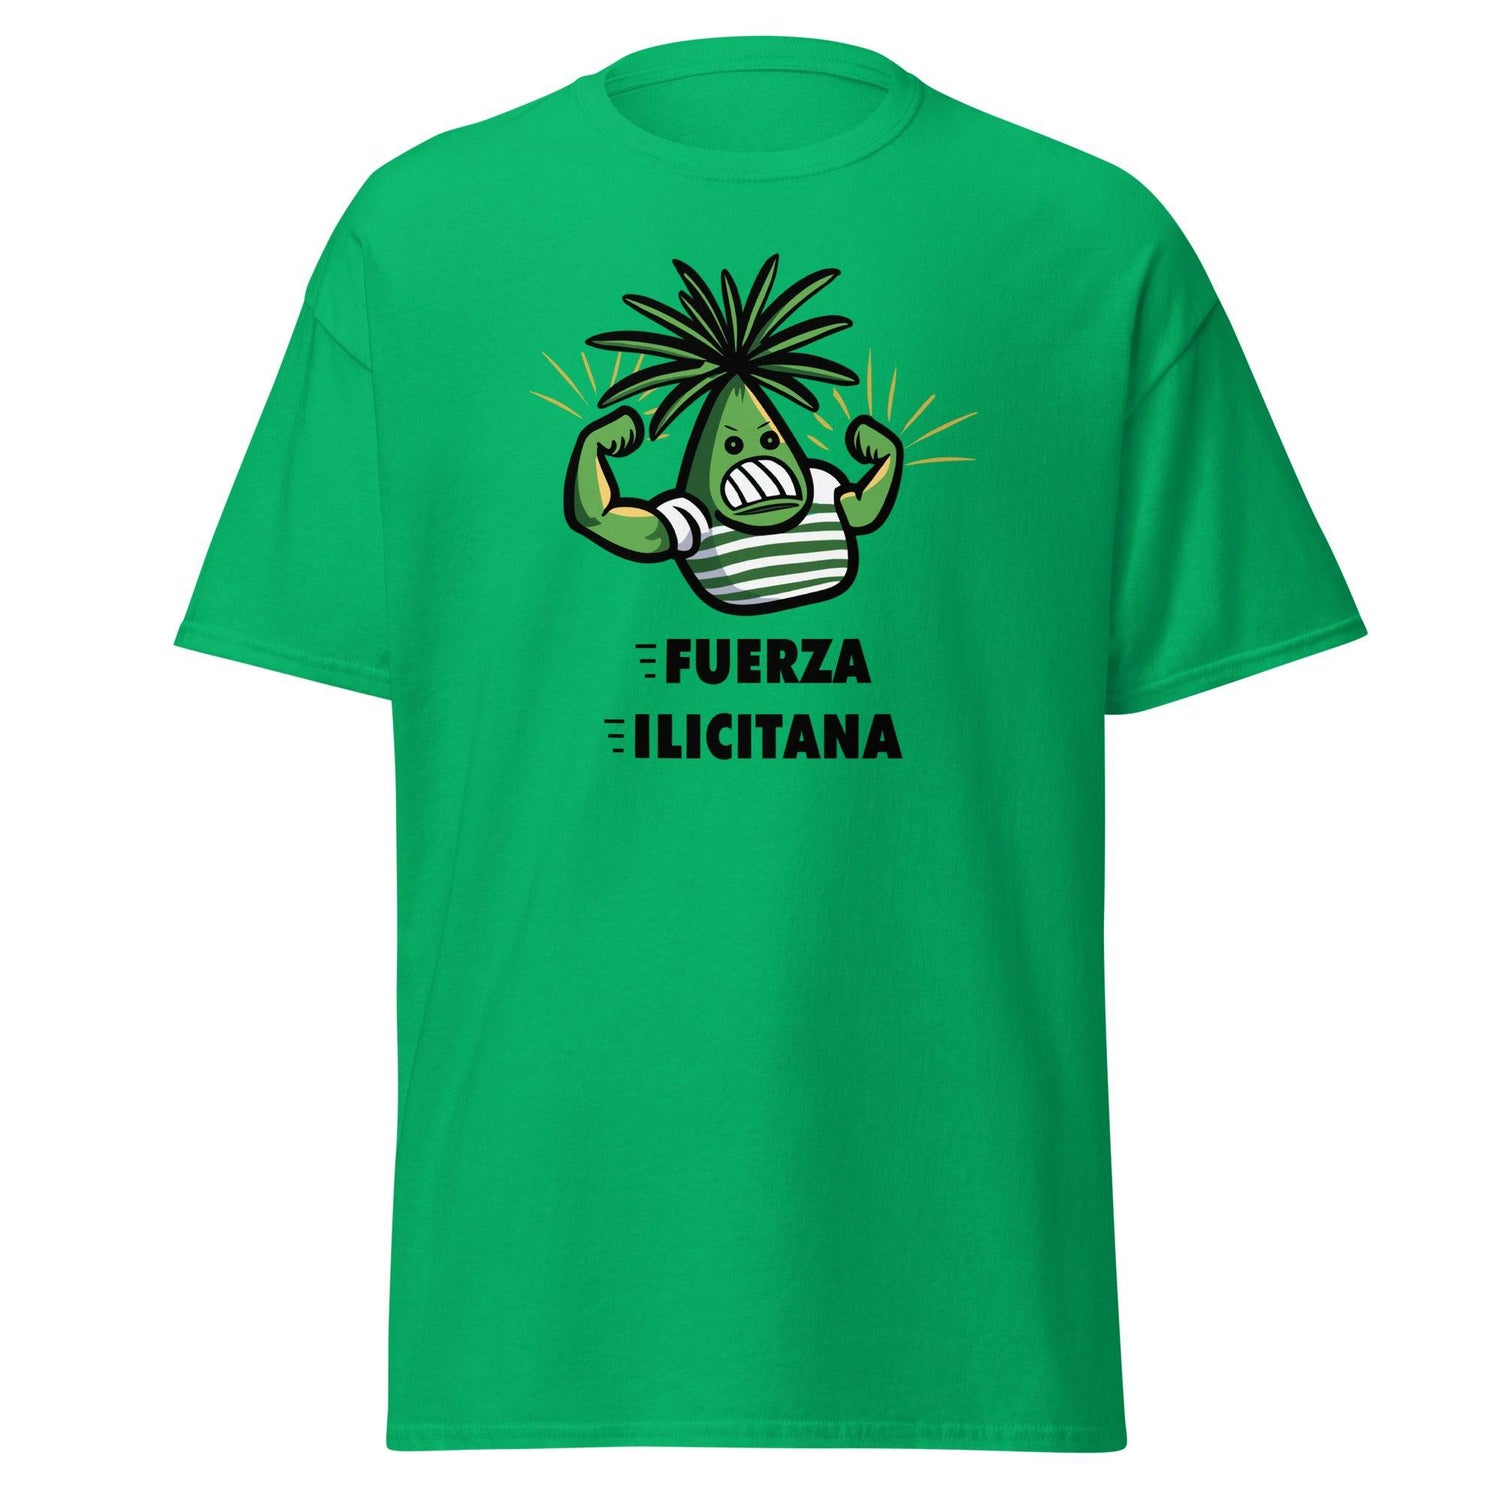 Camiseta verde Elche equipo fútbol Fuerza Ilicitana Palmera front